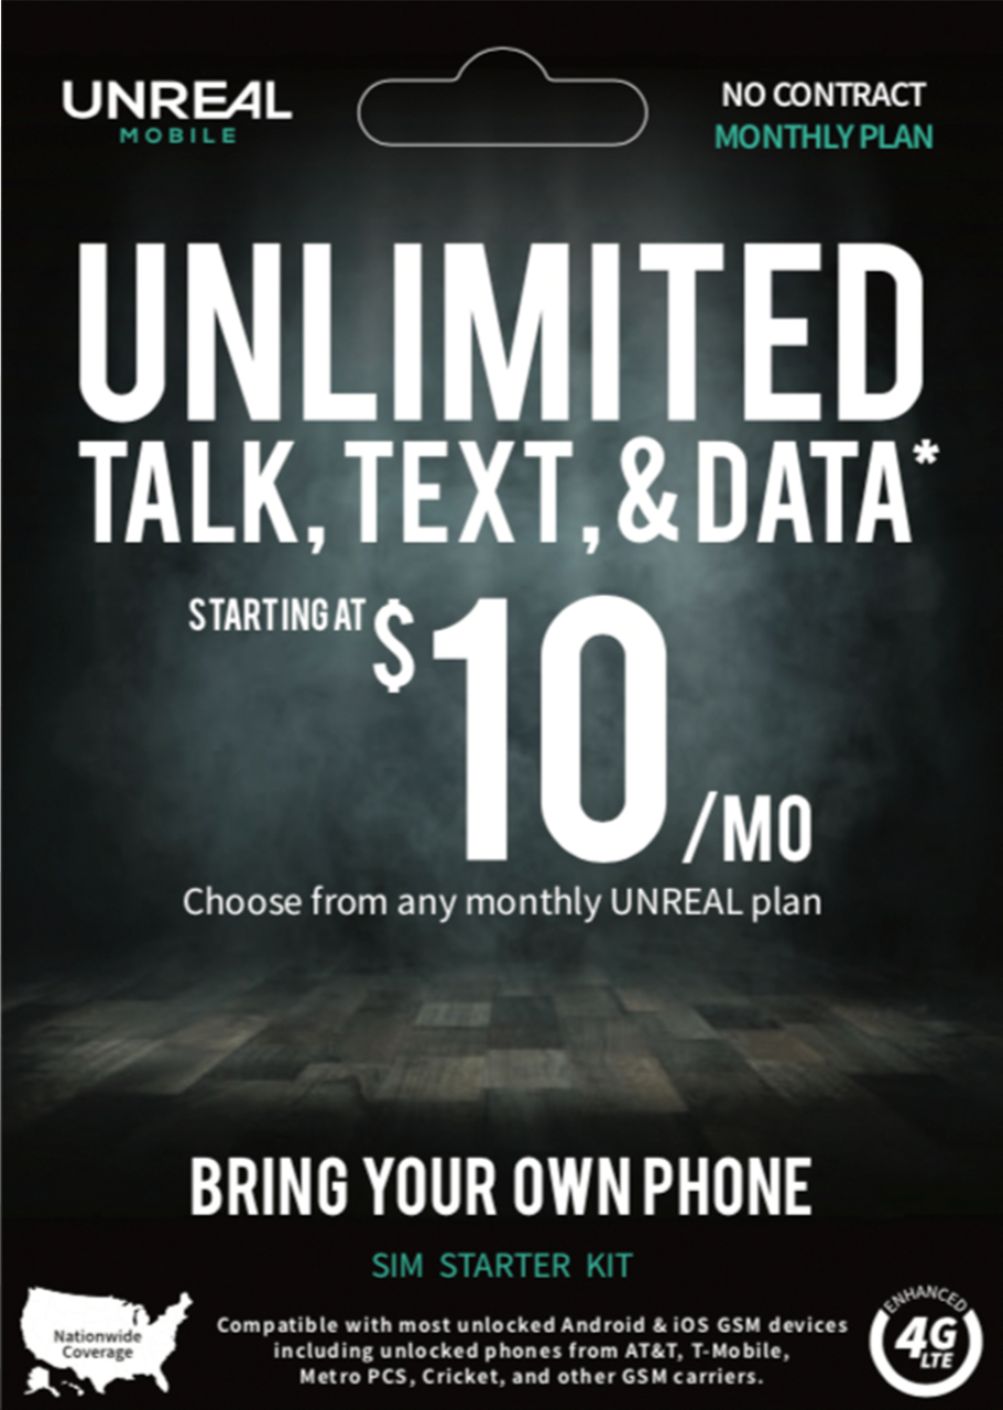 UNREAL Mobile - Basic Monthly Plan 4G LTE 3-in-1 SIM Starter Kit